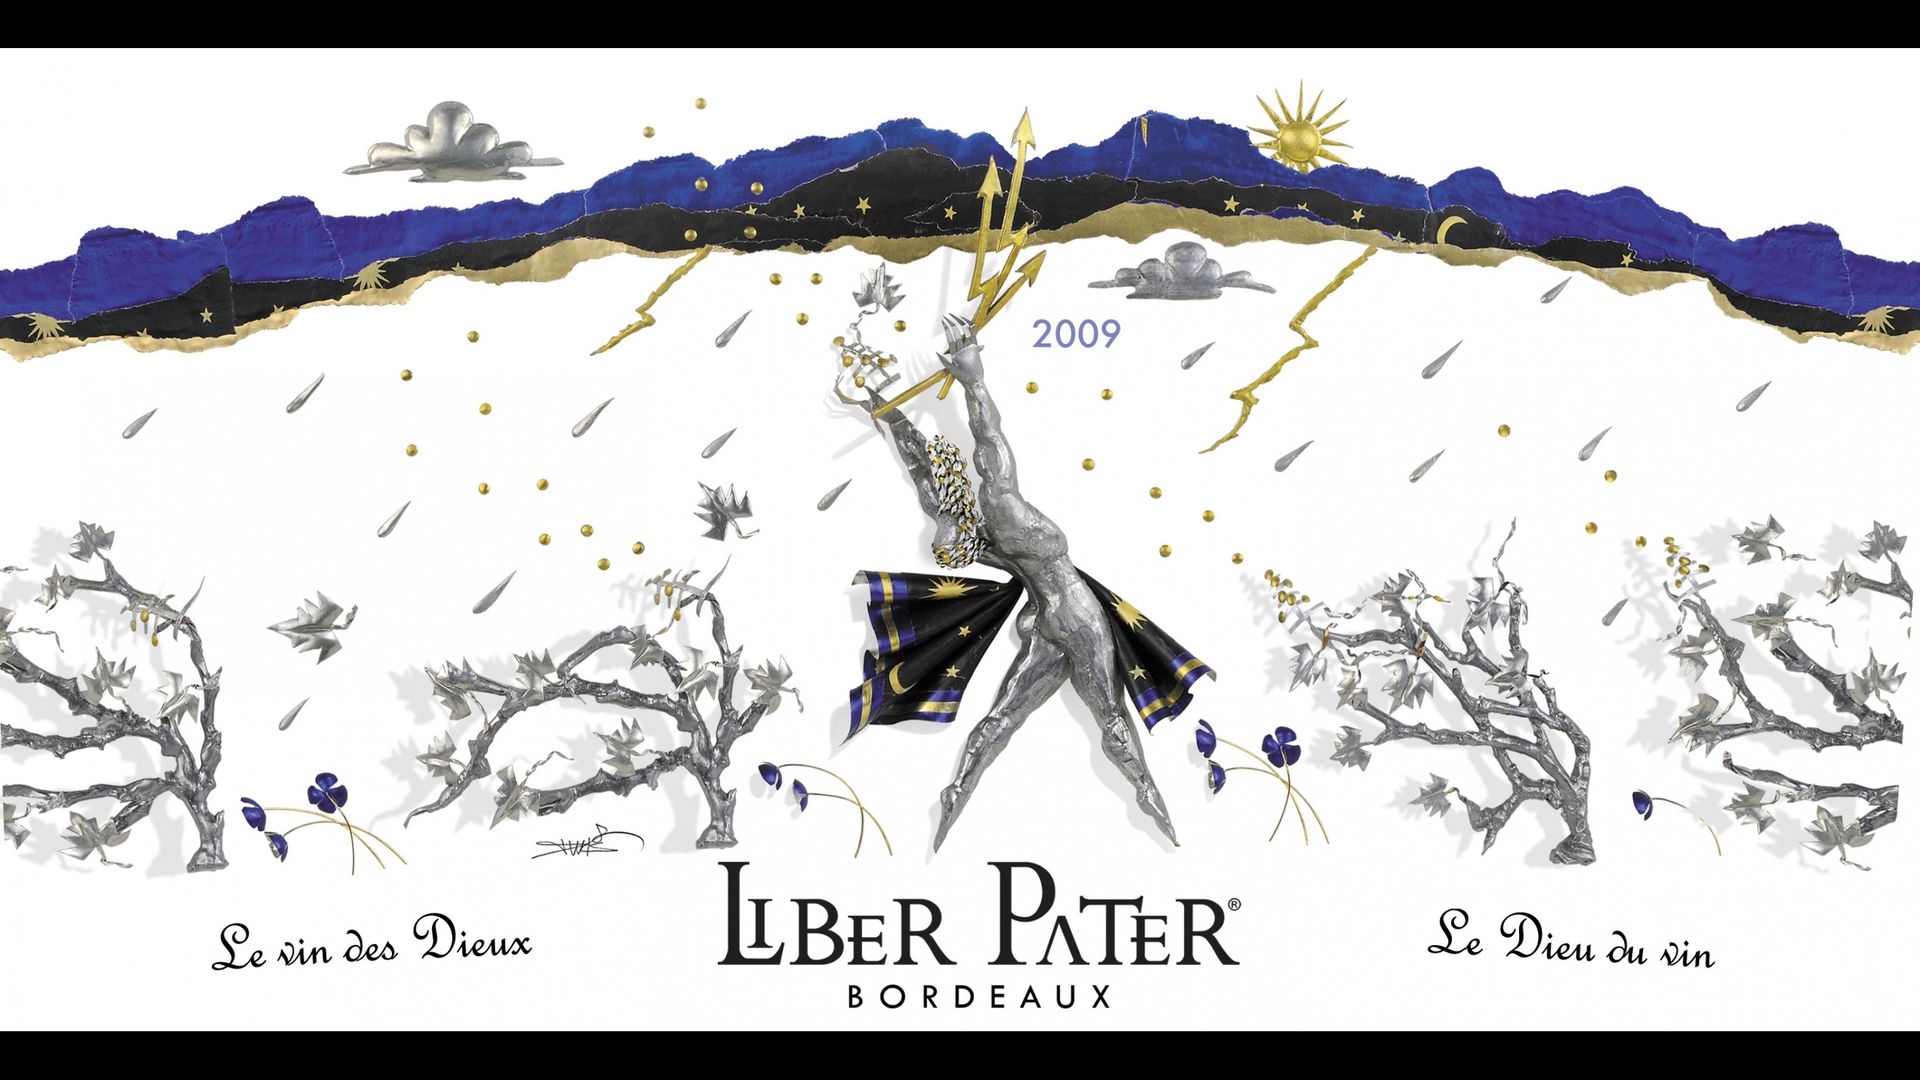 A Liber Pater wine label